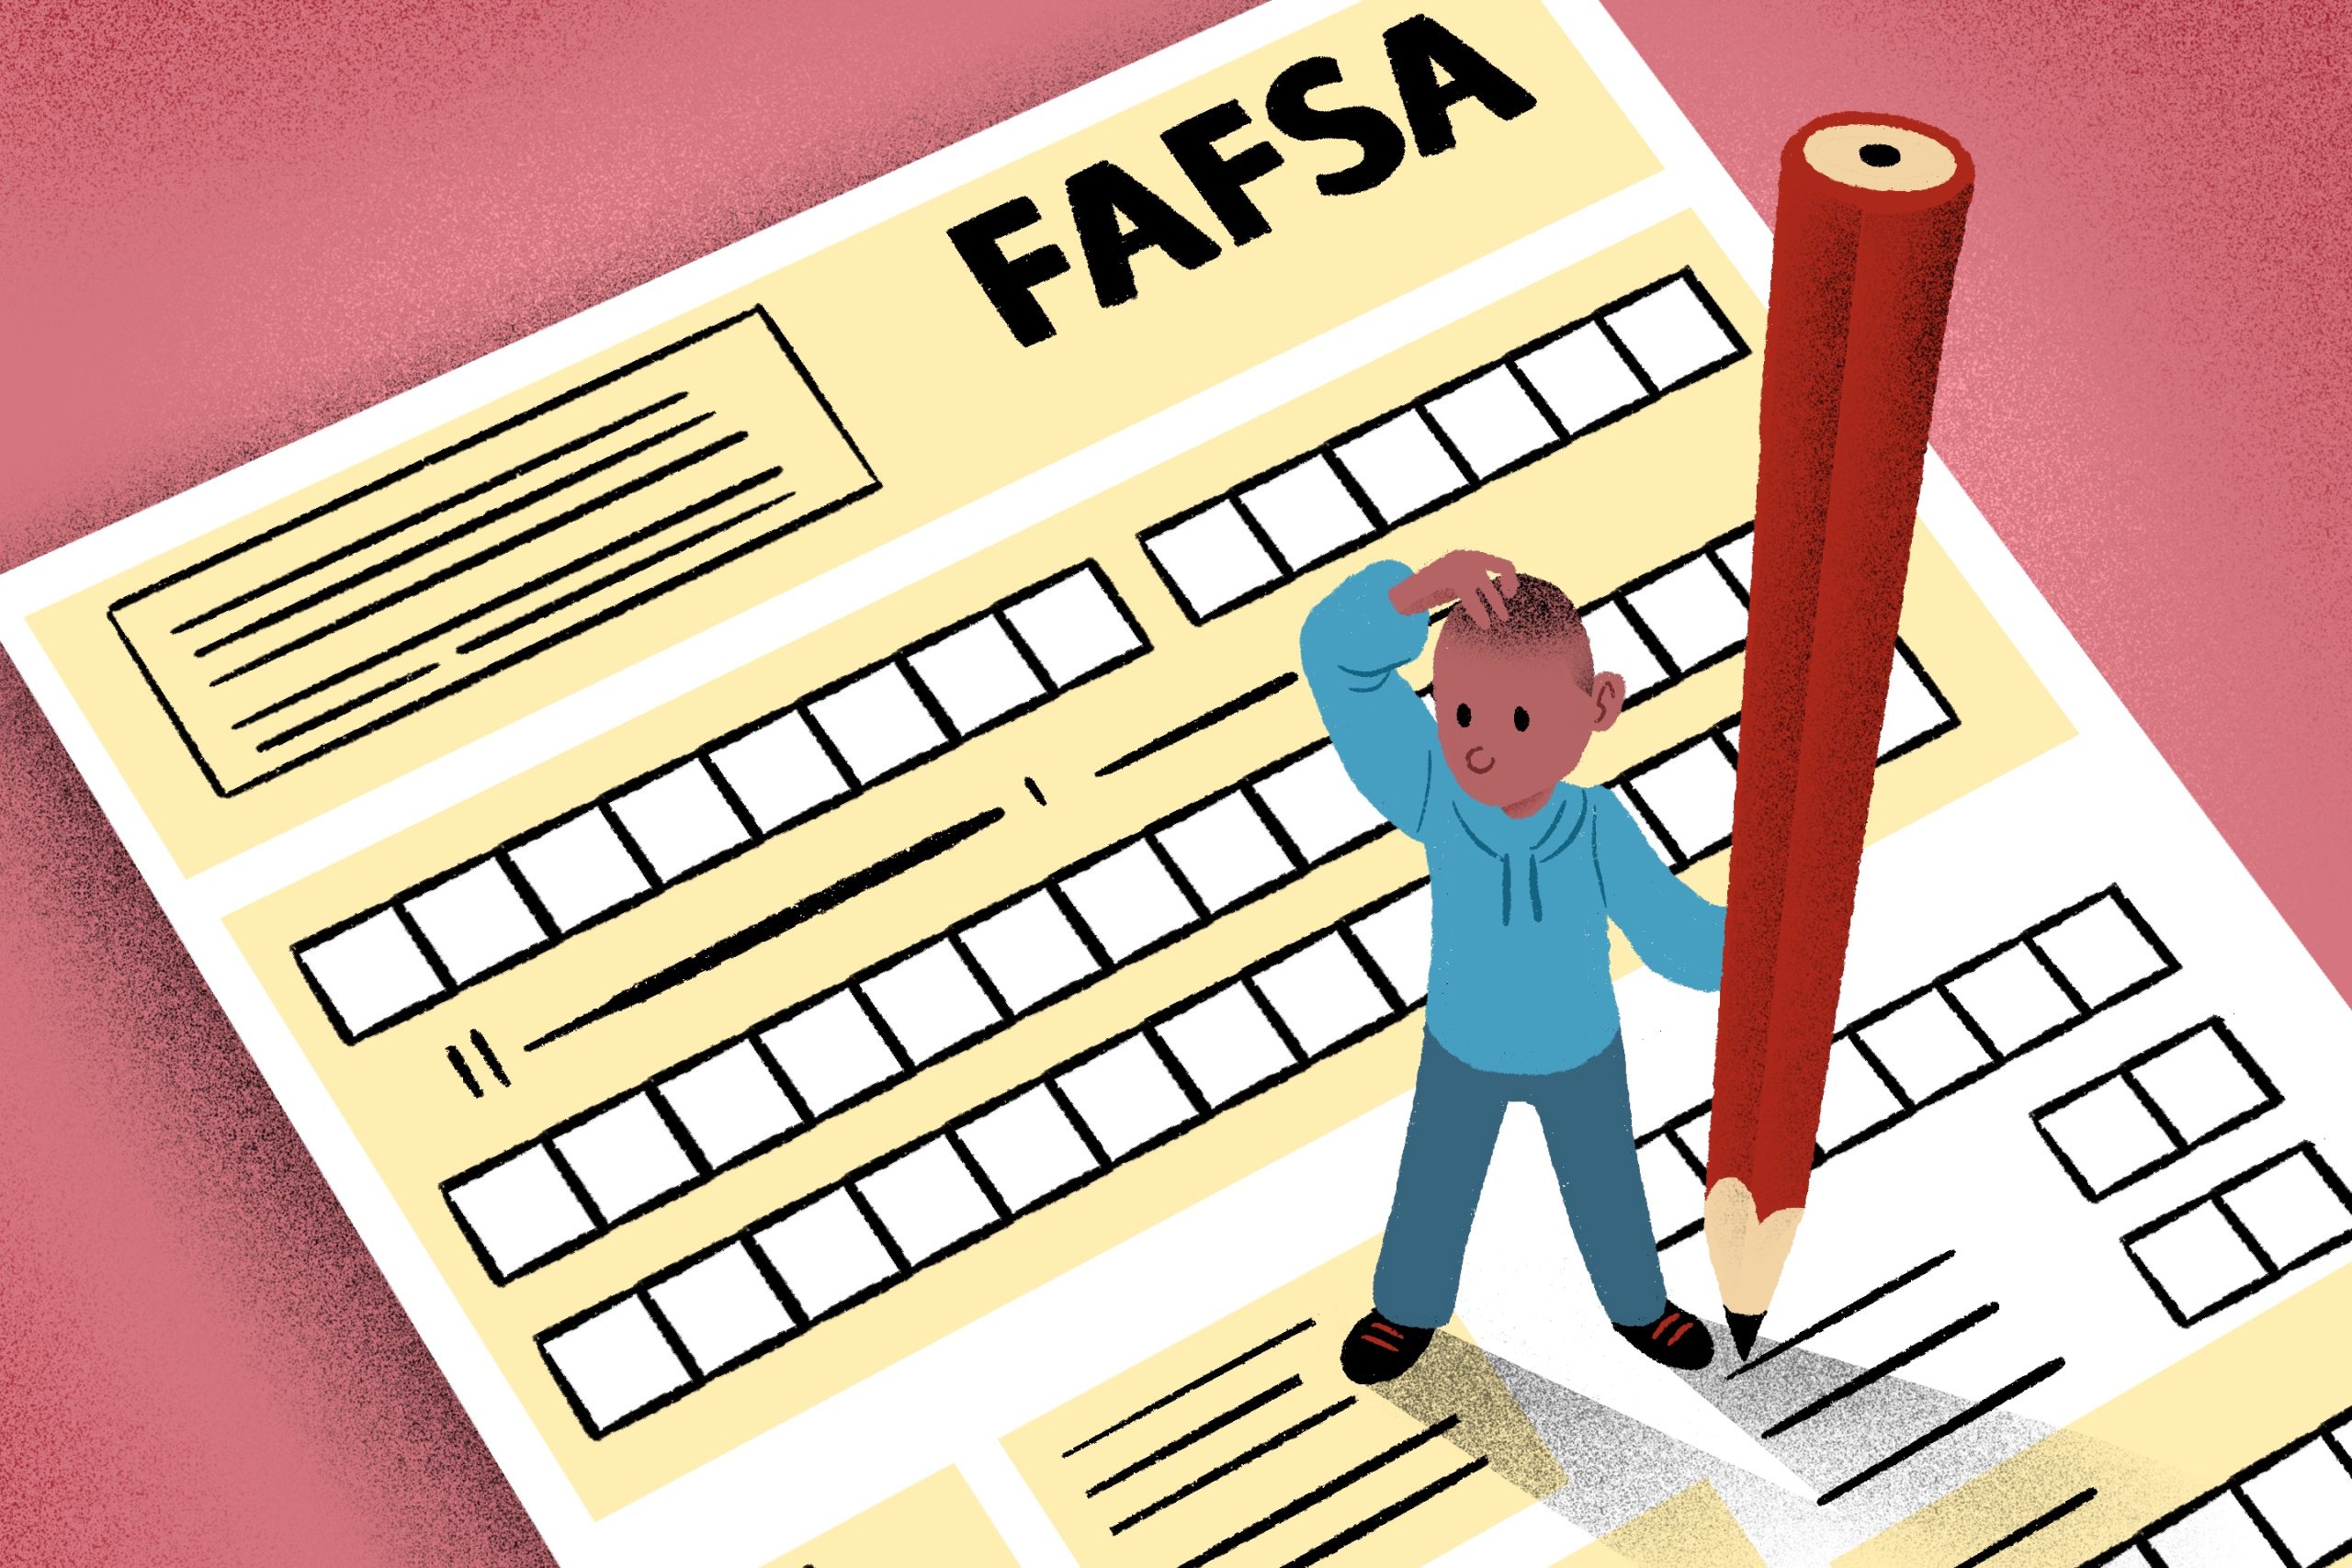 FAFSA delays